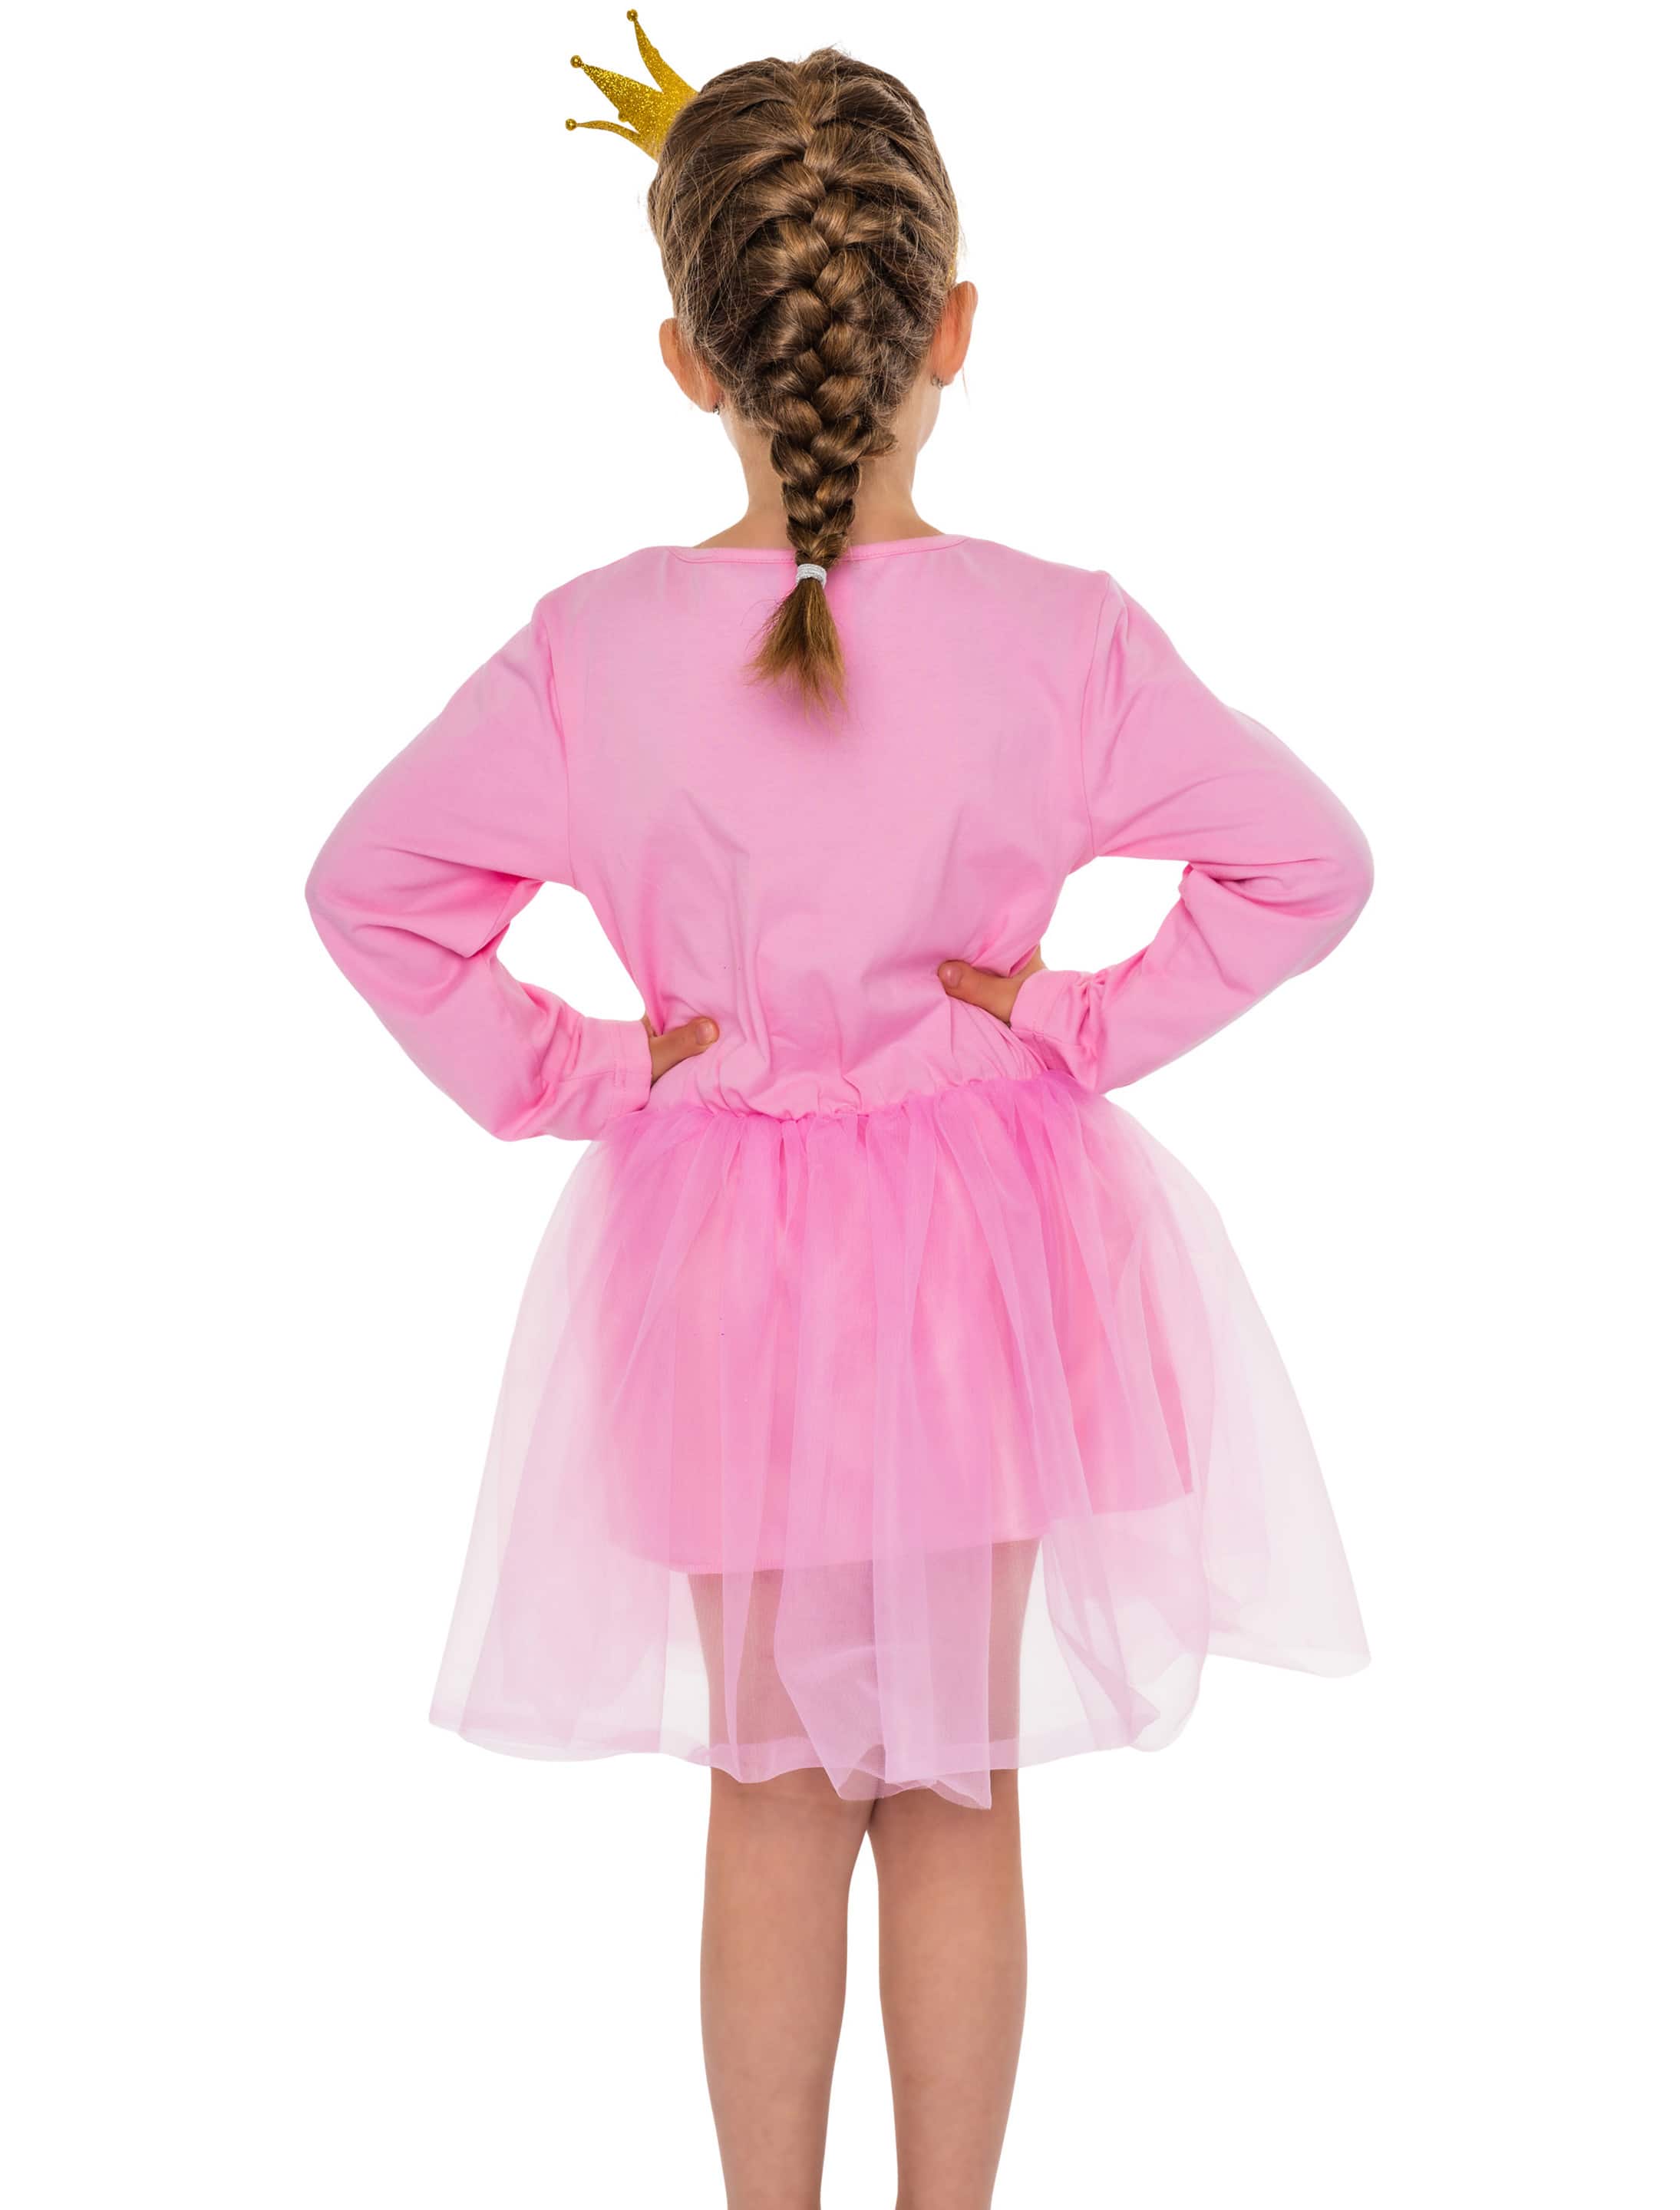 Kleid Ballerina pink 116-128